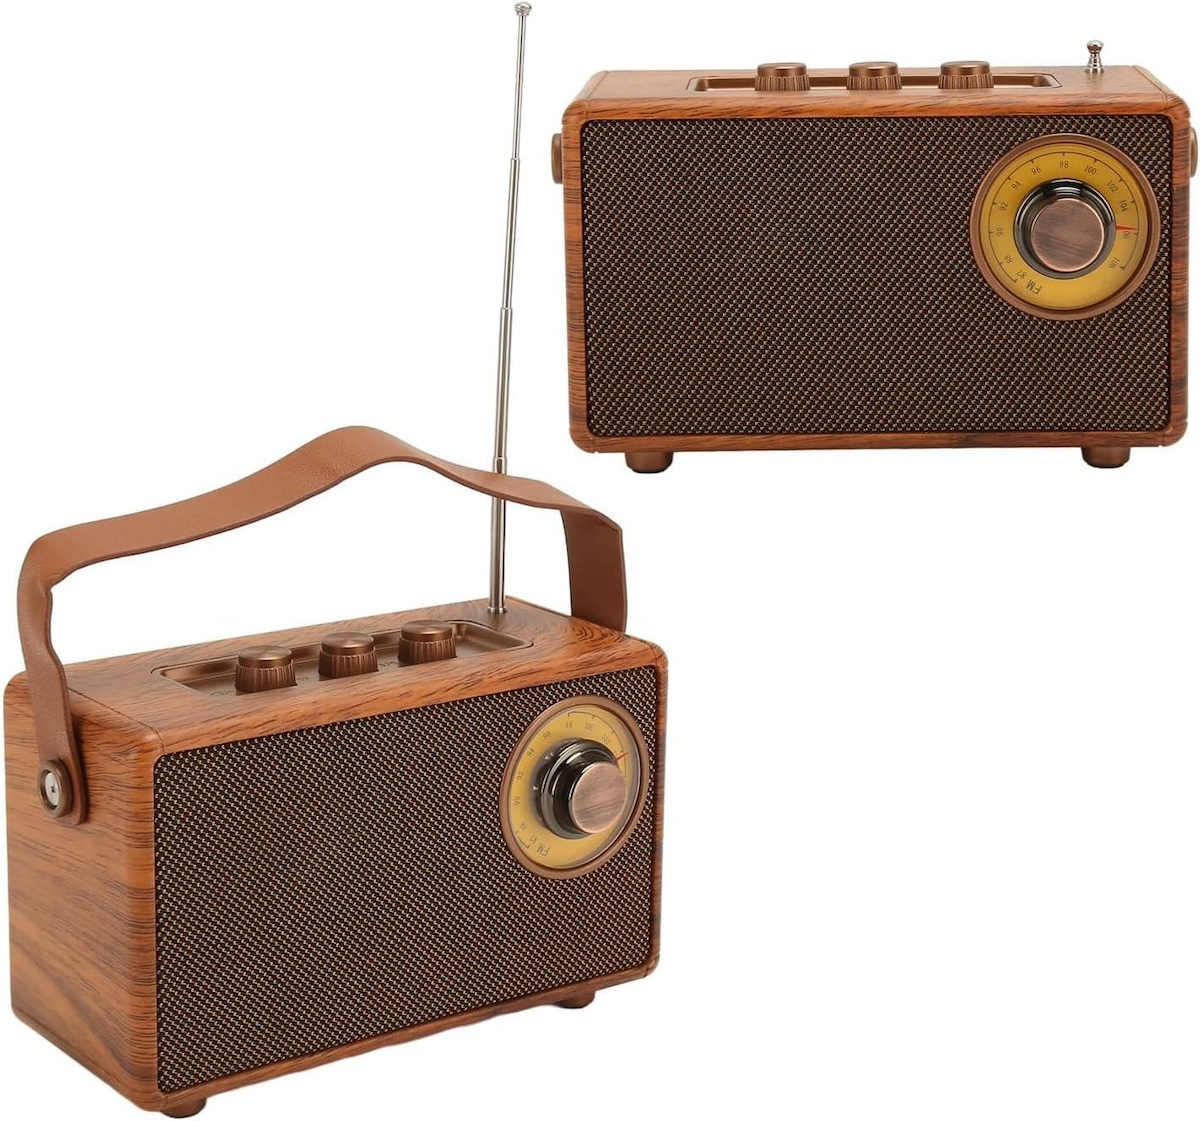 radyo mini küçük retro vintage ahşap tarzı